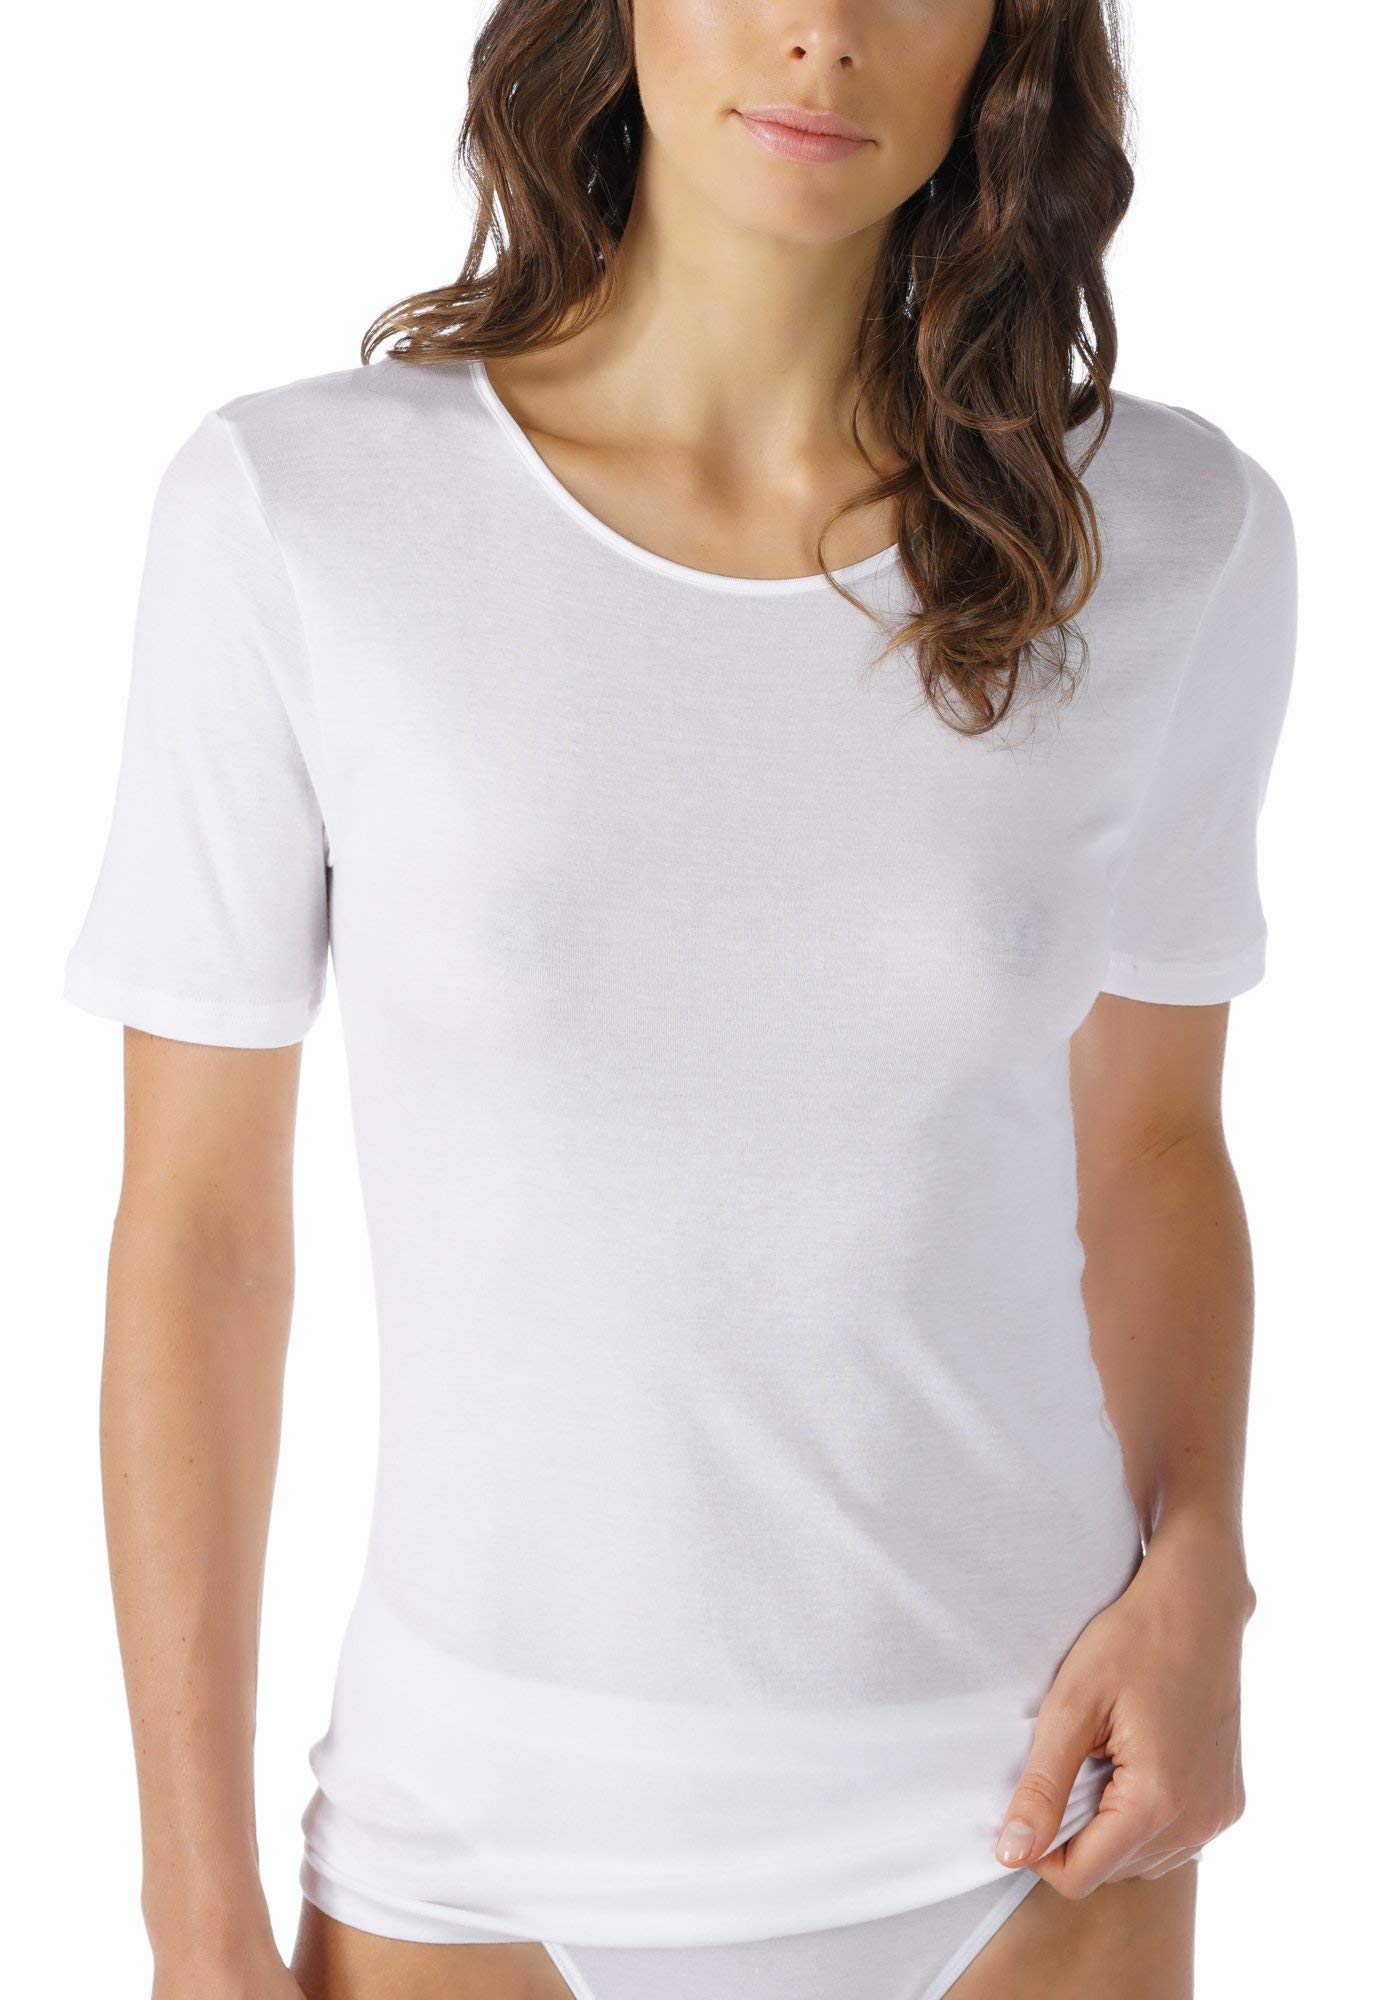 Mey Tagwäsche Serie Noblesse Damen Shirts 1/2 Arm Weiss S(38)